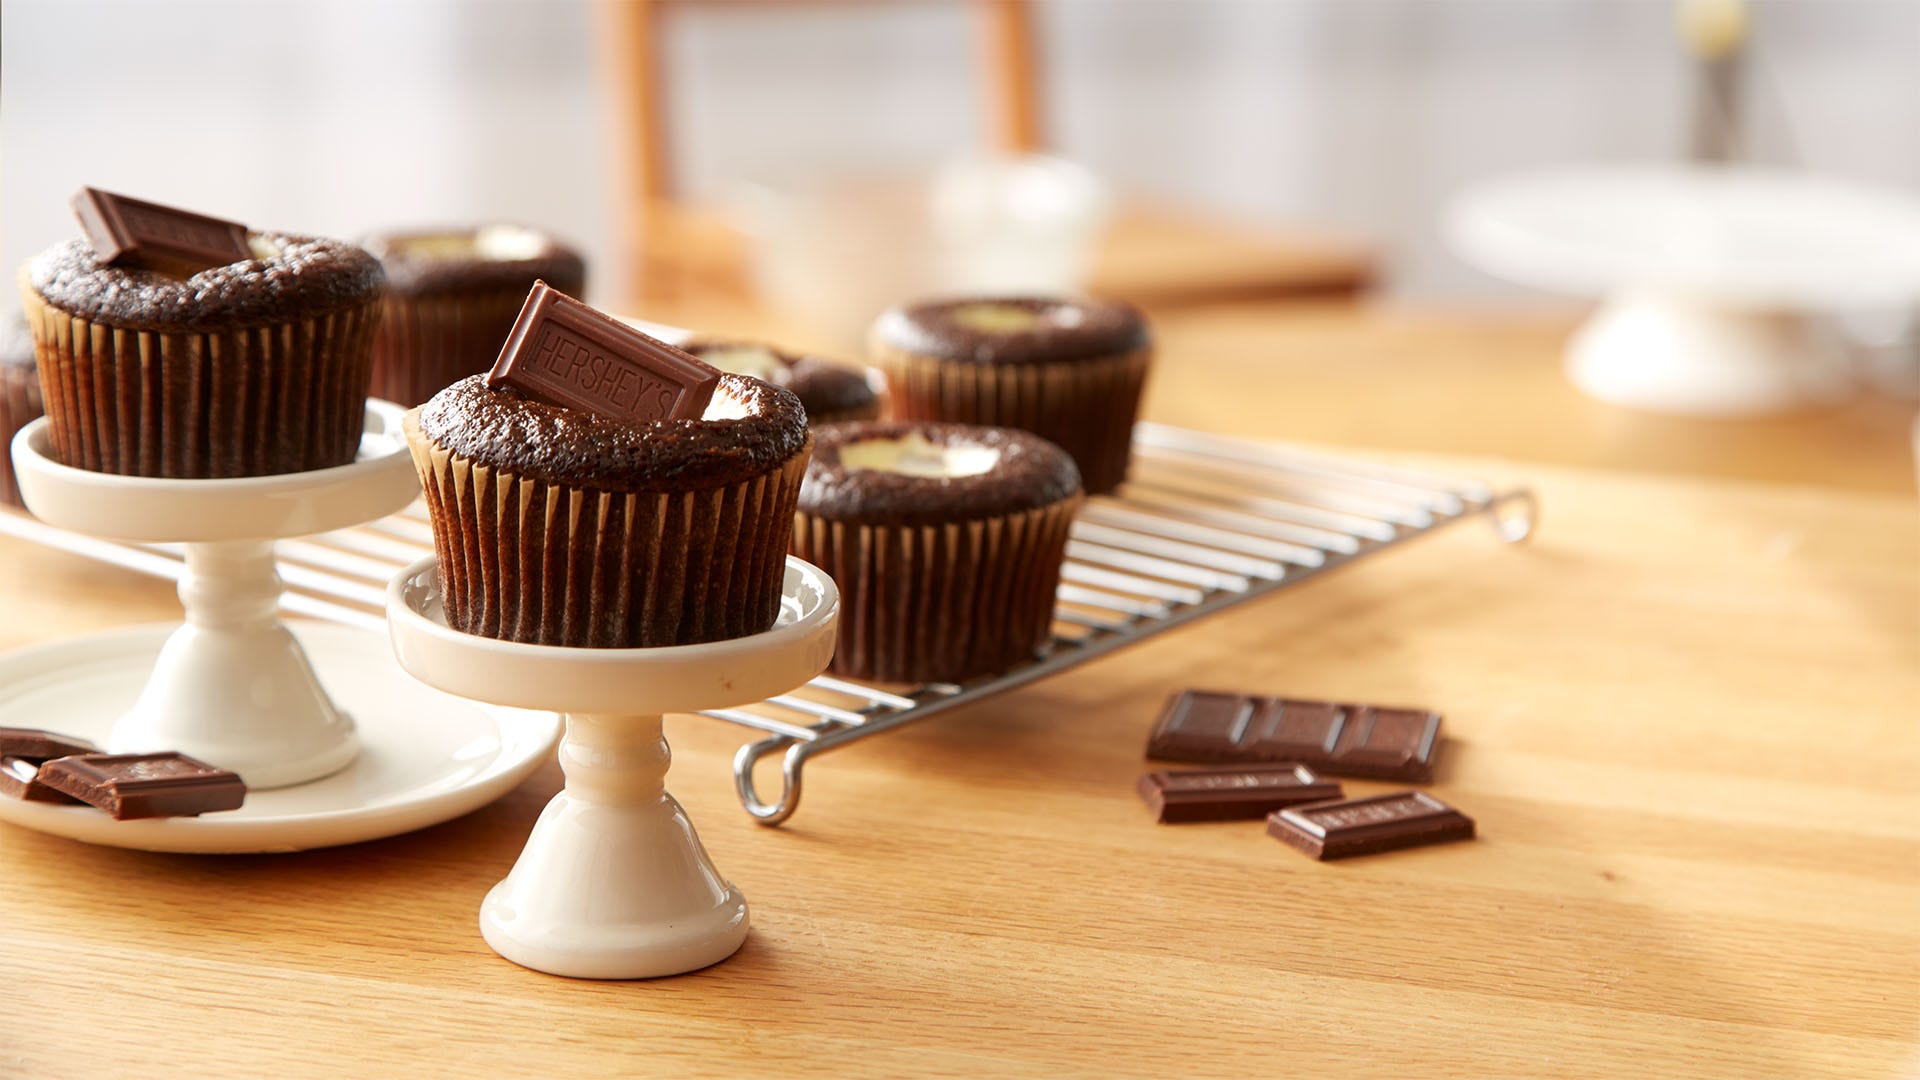 hersheys chocolate bar filled chocolate cupcakes recipe